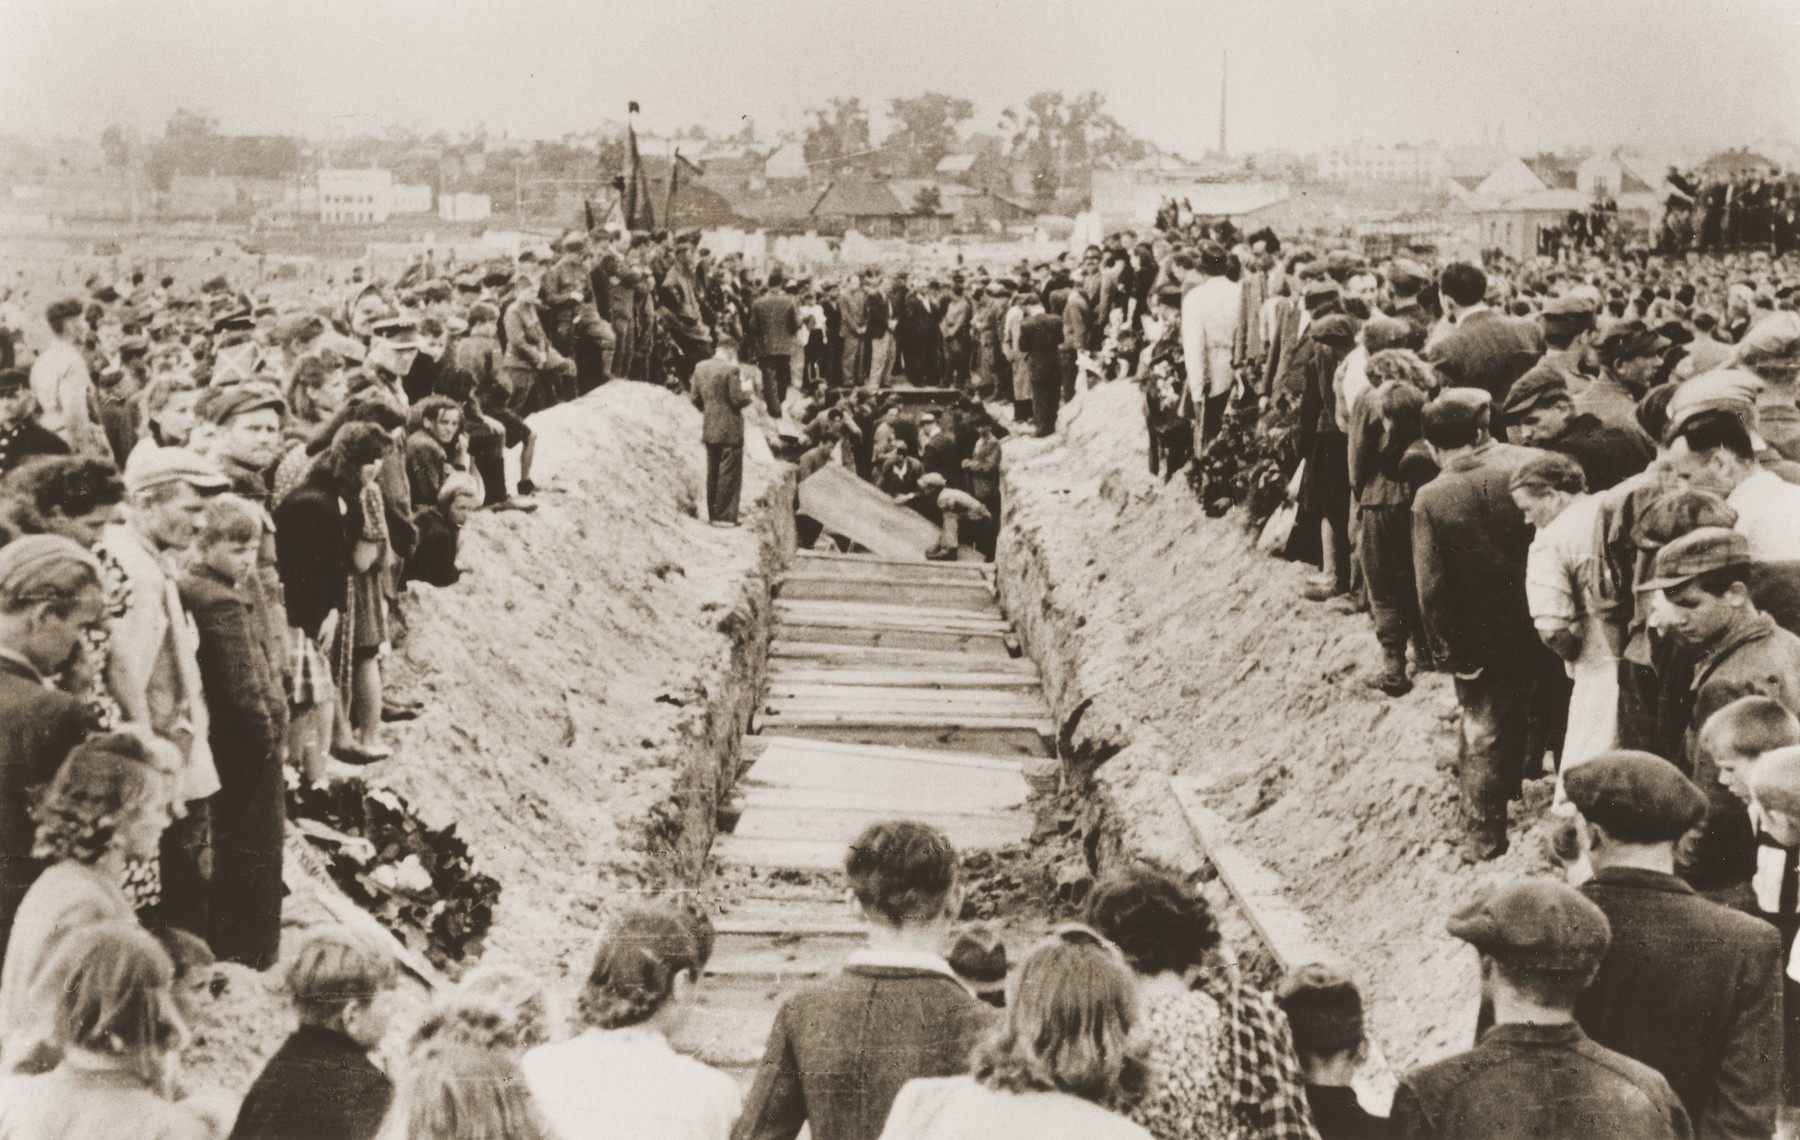 Burying the pogrom victims (Kielce, Jul. 1946)